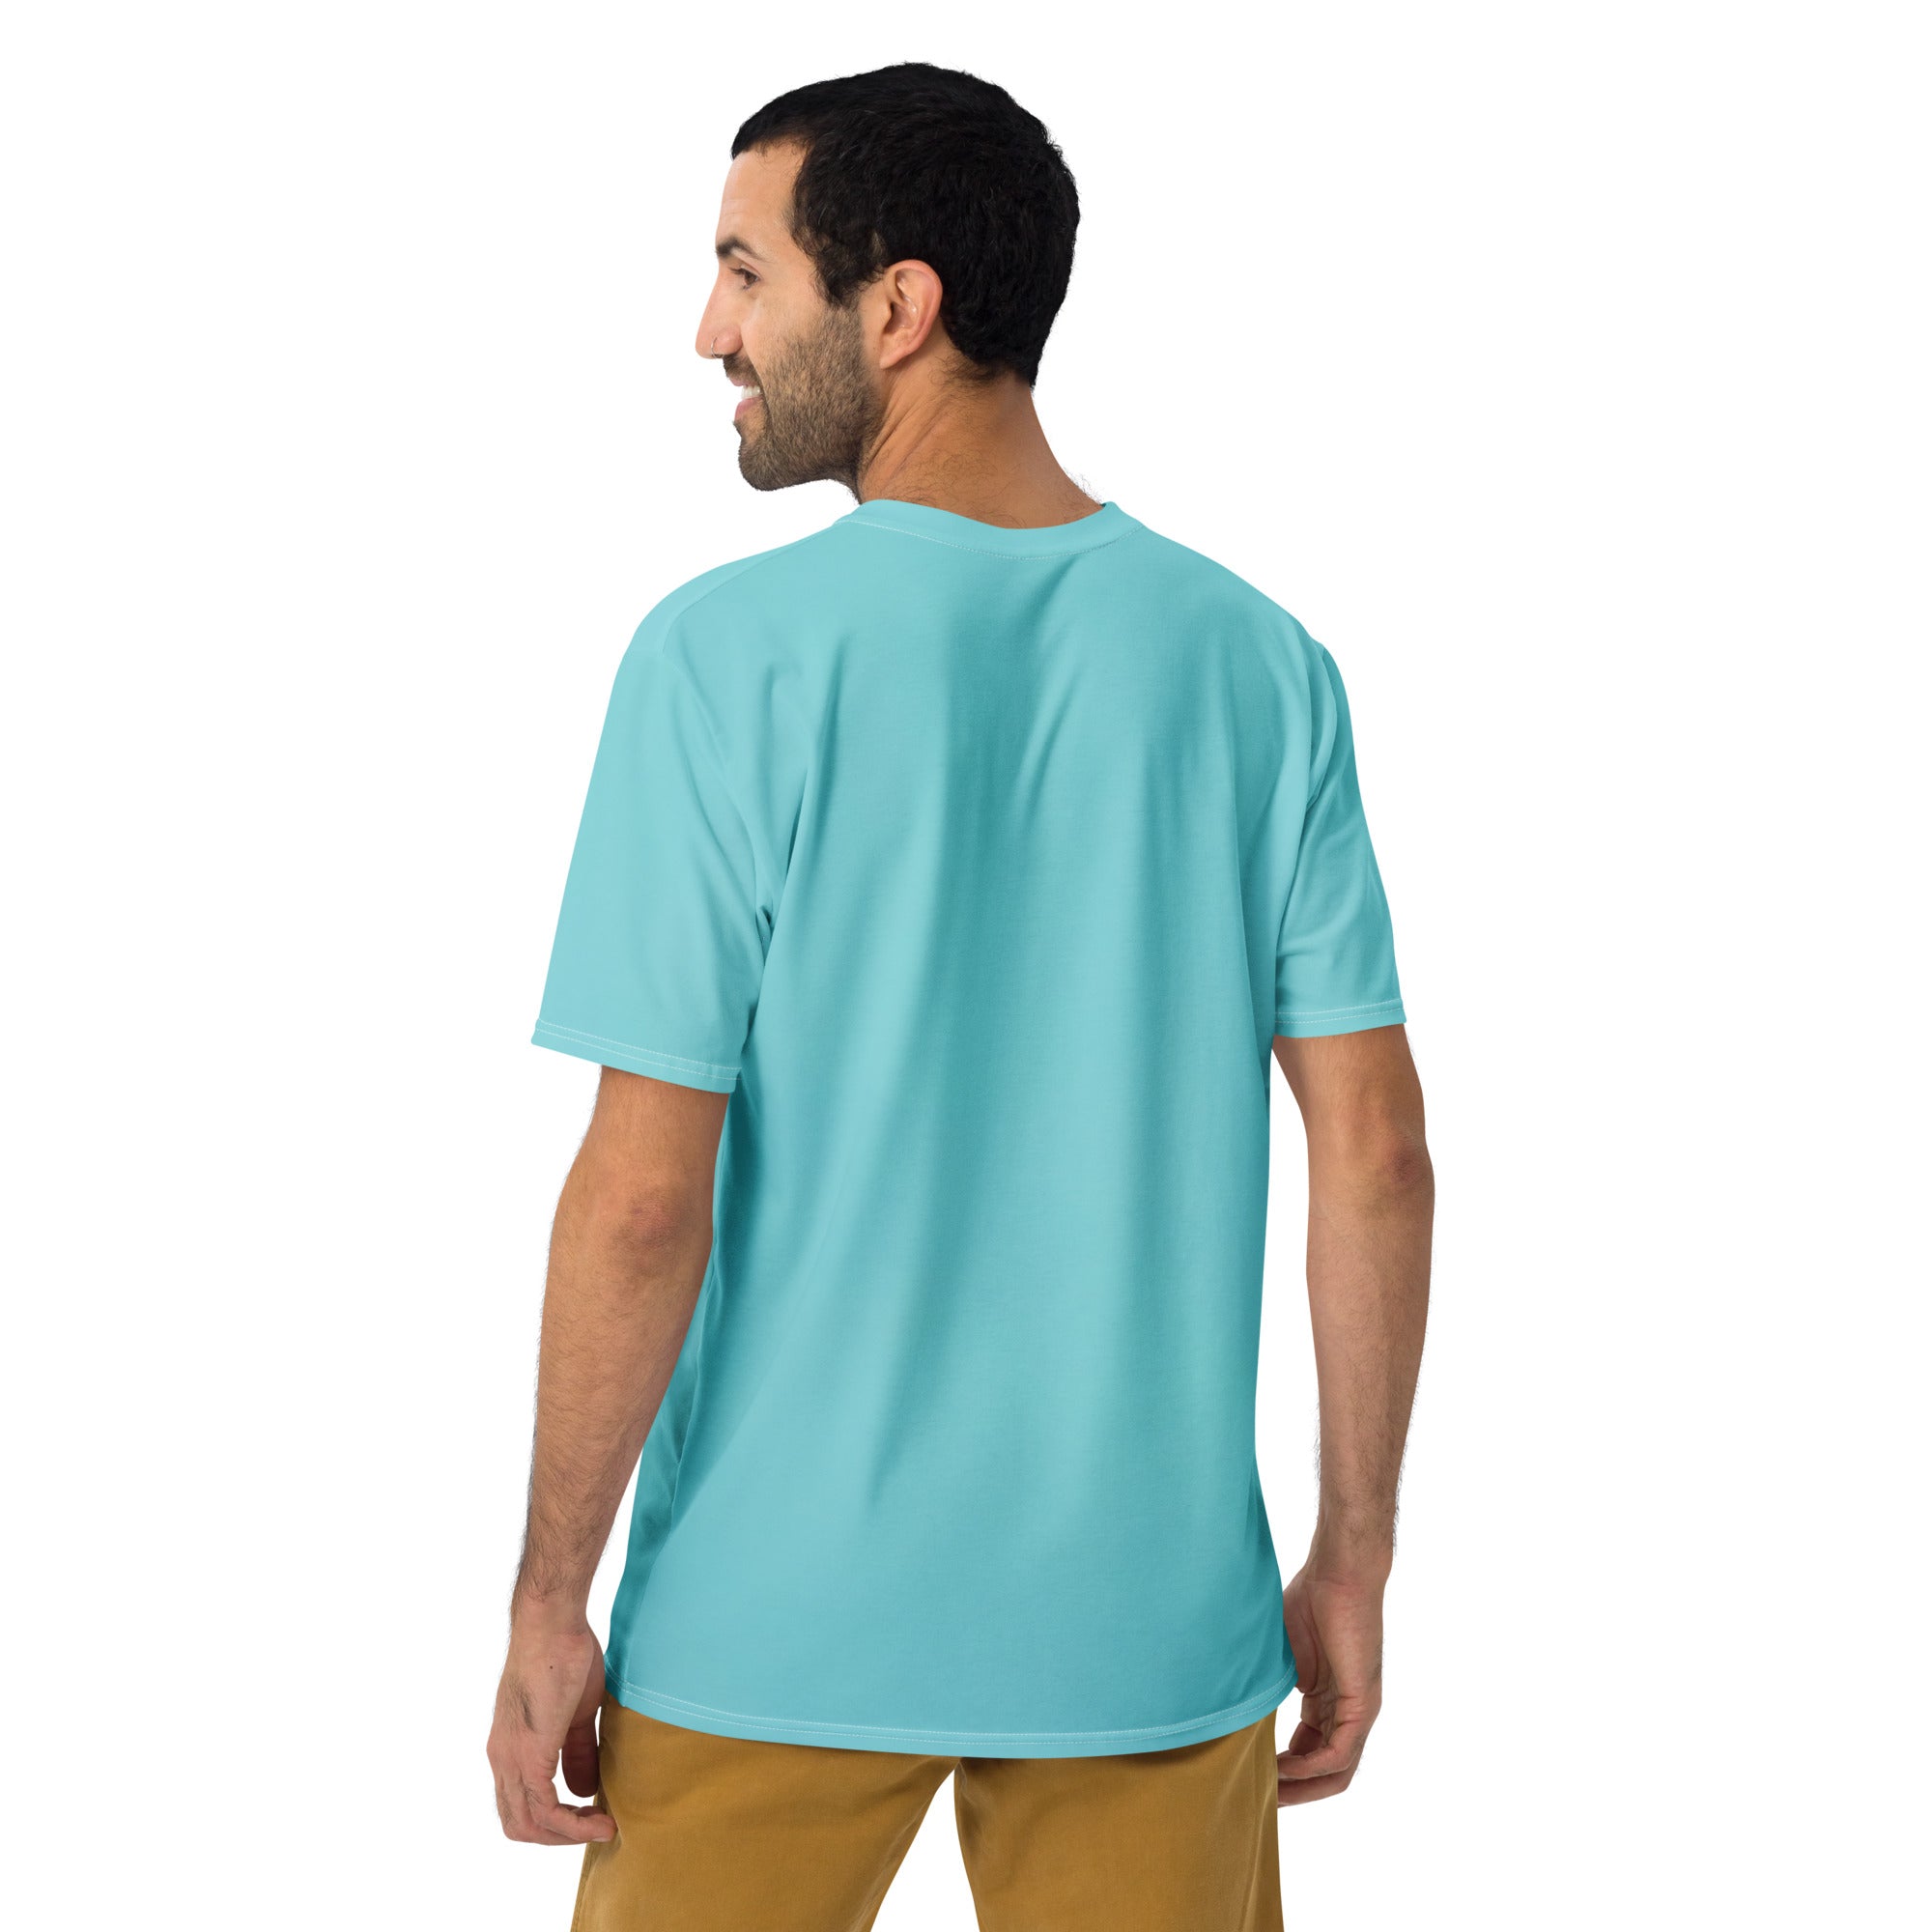 Men's crew neck t-shirt featuring Kirigram forest design.